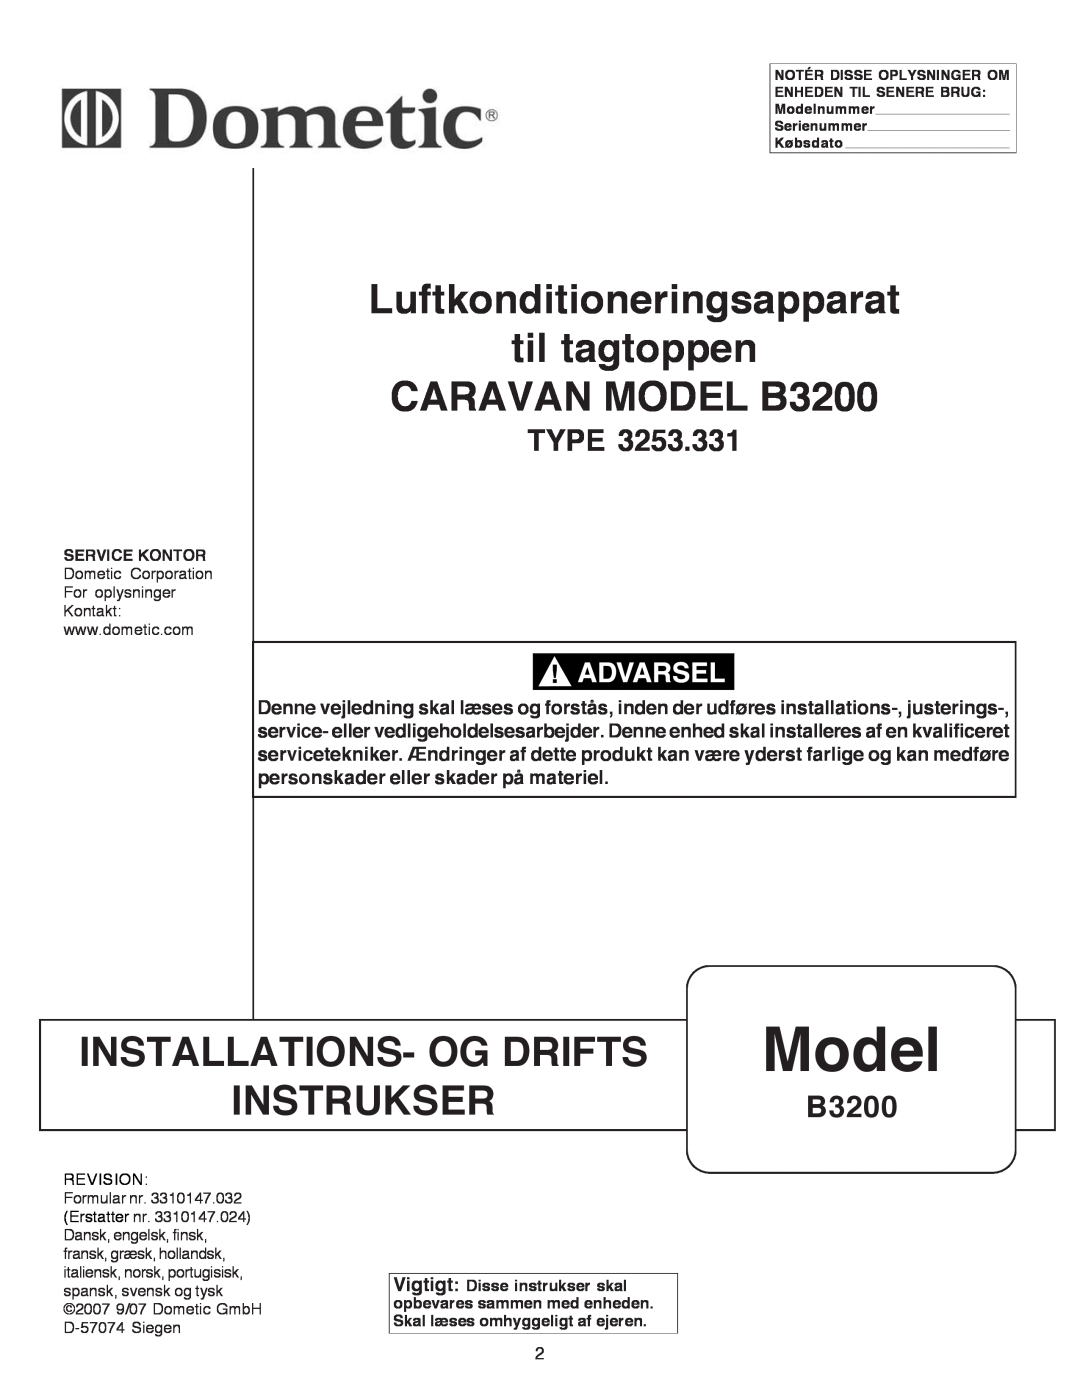 Dometic manual Model, Luftkonditioneringsapparat til tagtoppen, CARAVAN MODEL B3200, Installations- Og Drifts, Type 